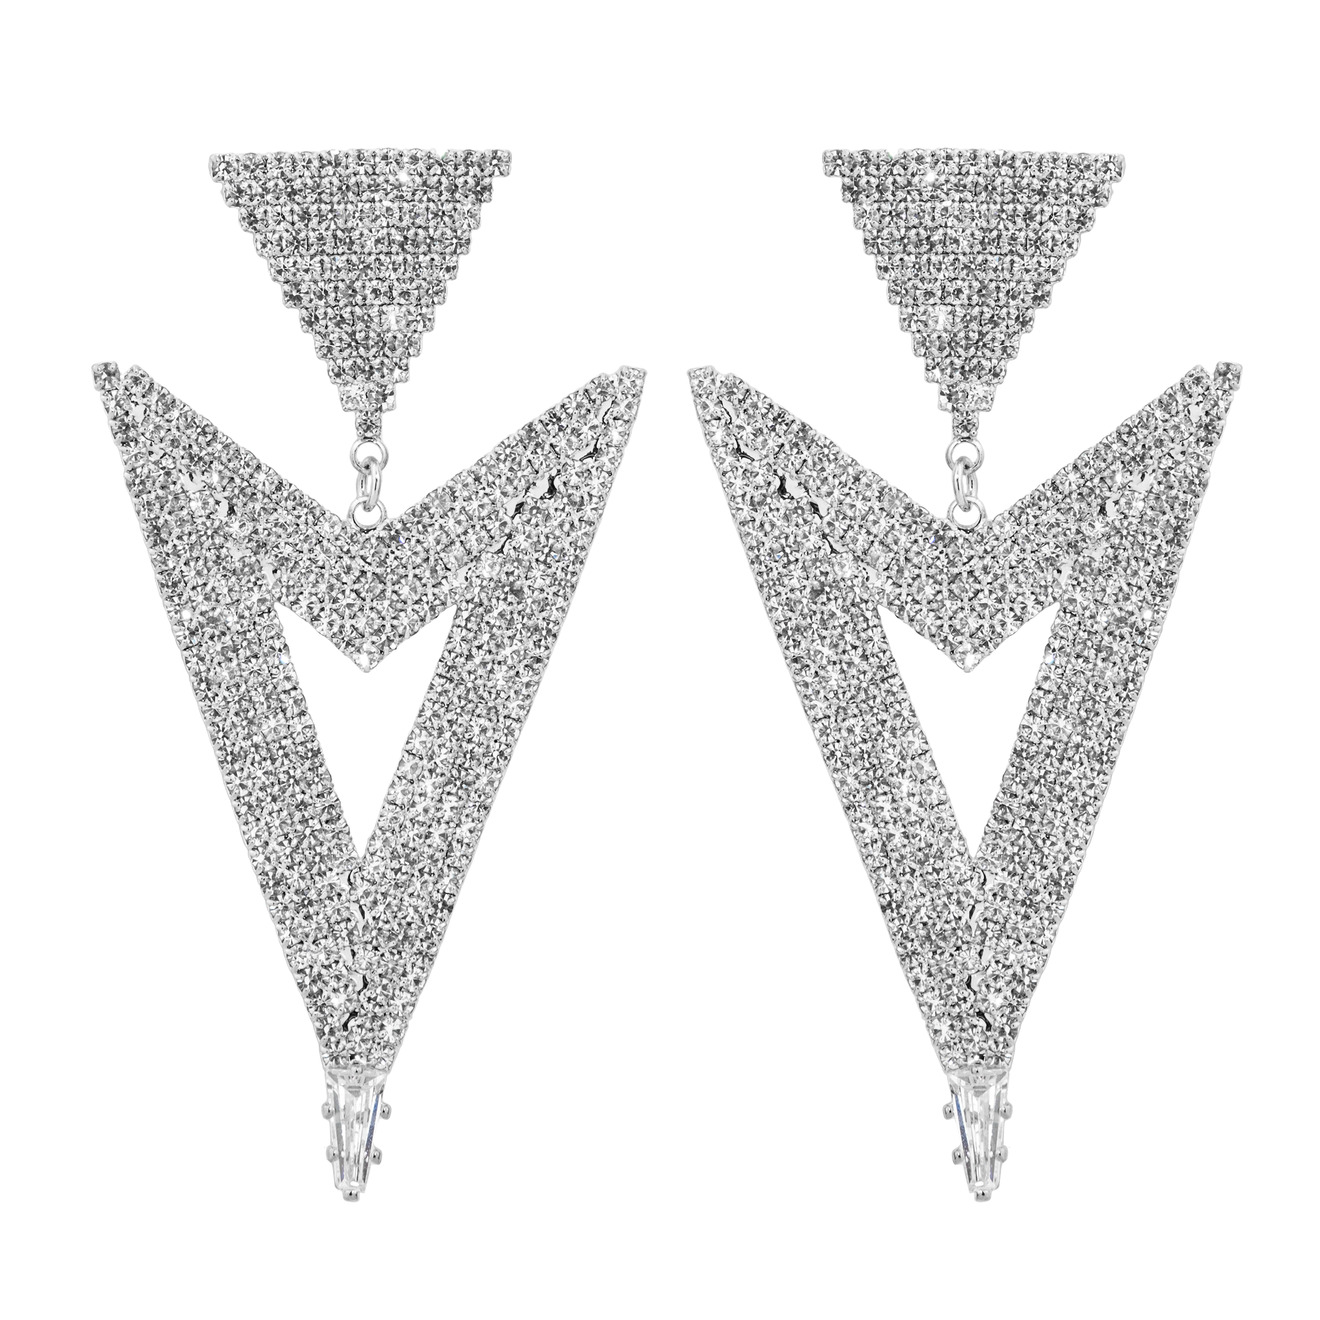 Herald Percy Серебристые серьги-стрелки с кристаллами herald percy серебристые серьги кресты с кристаллами